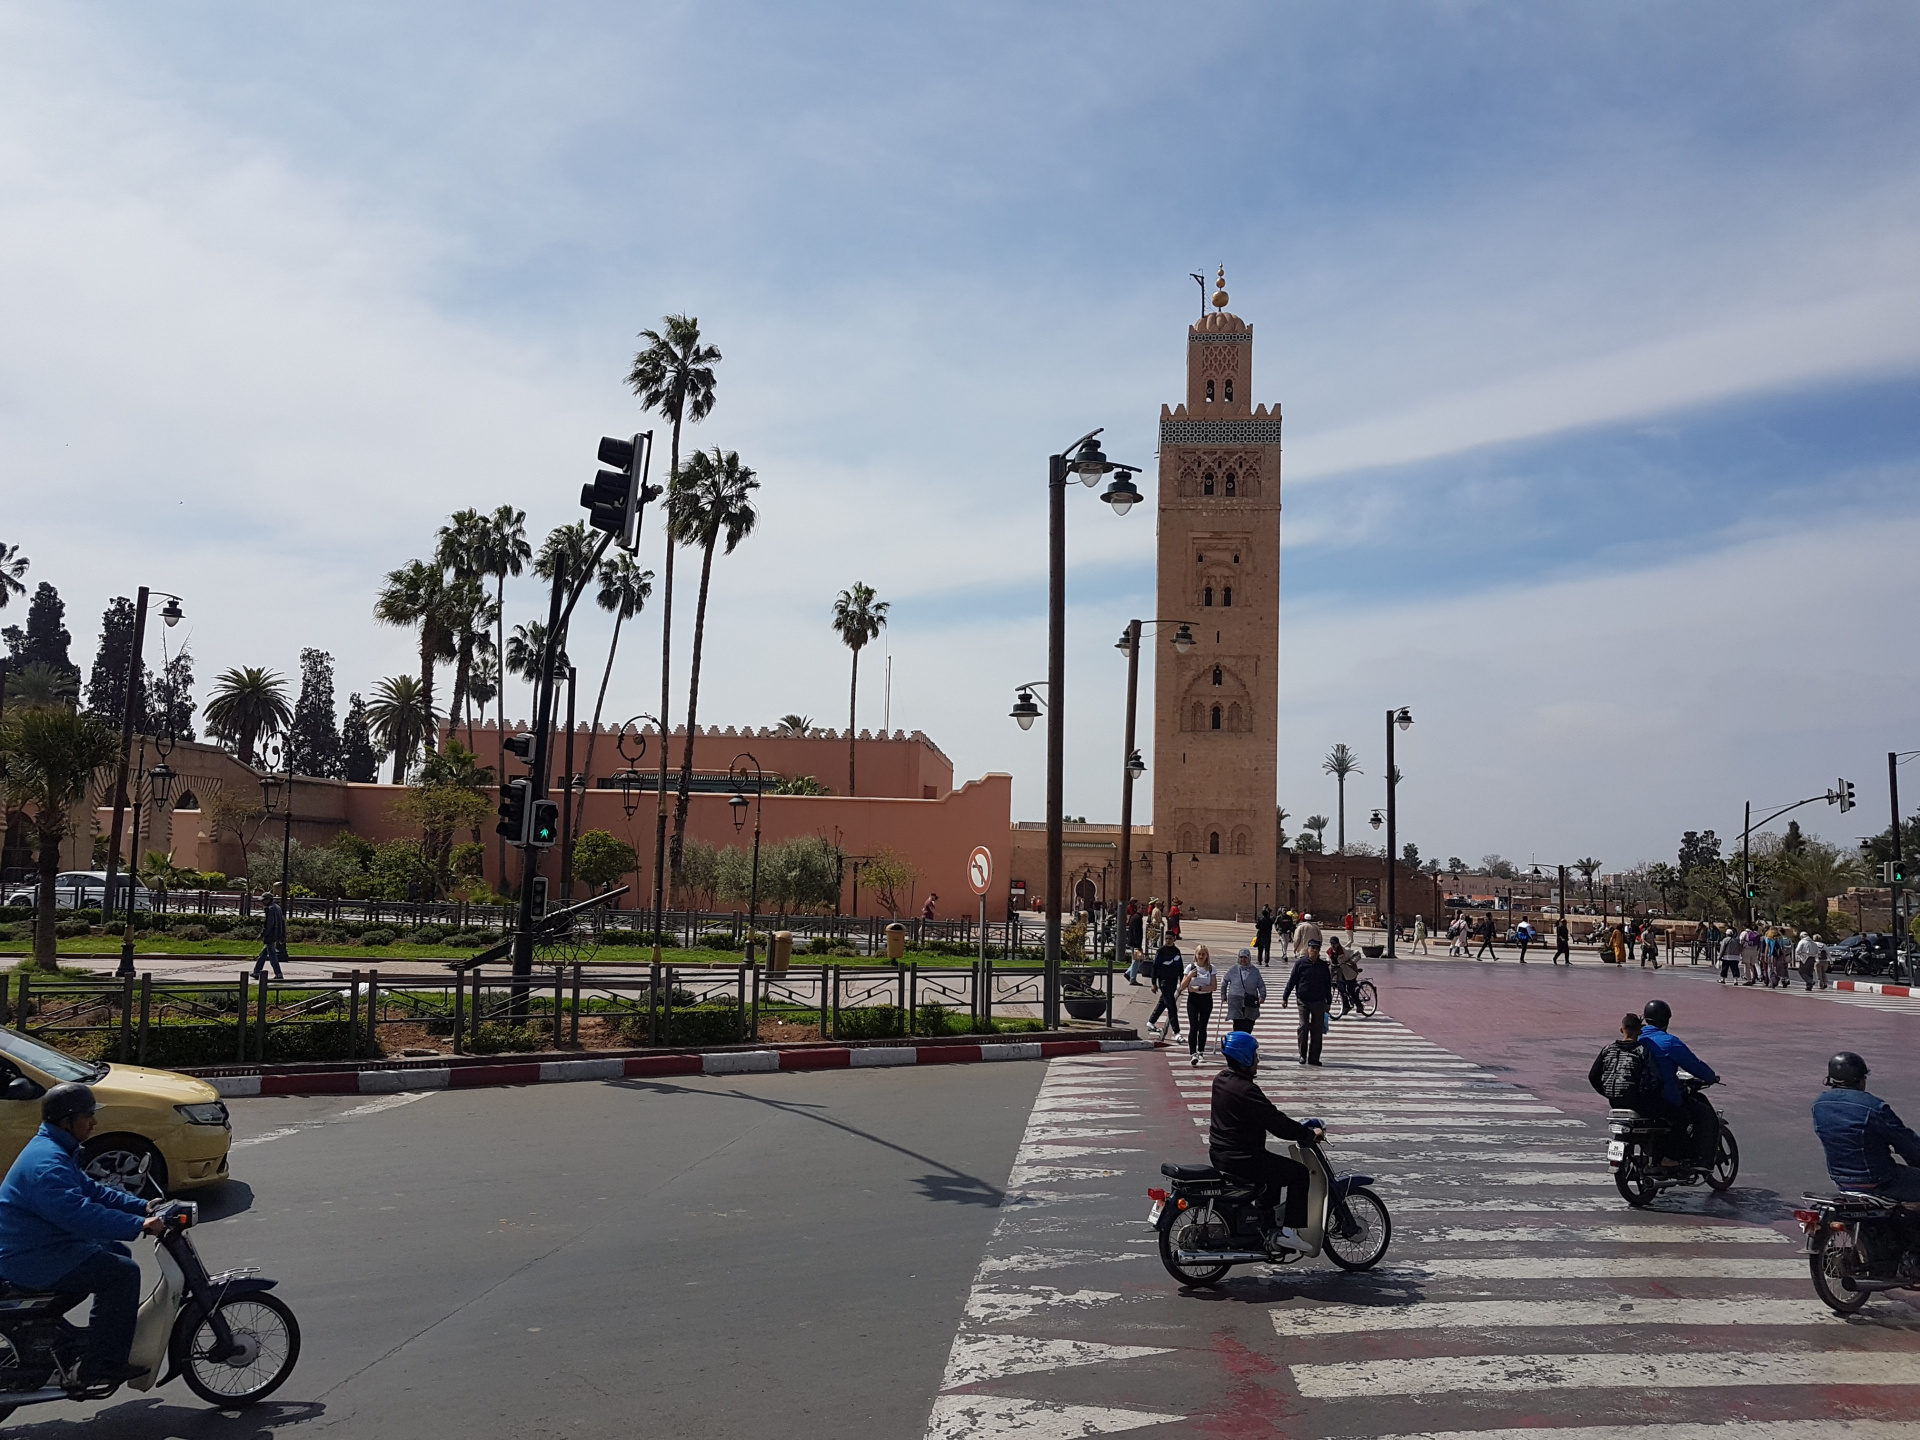 20180314-124553-Marrakech-SJ.jpg